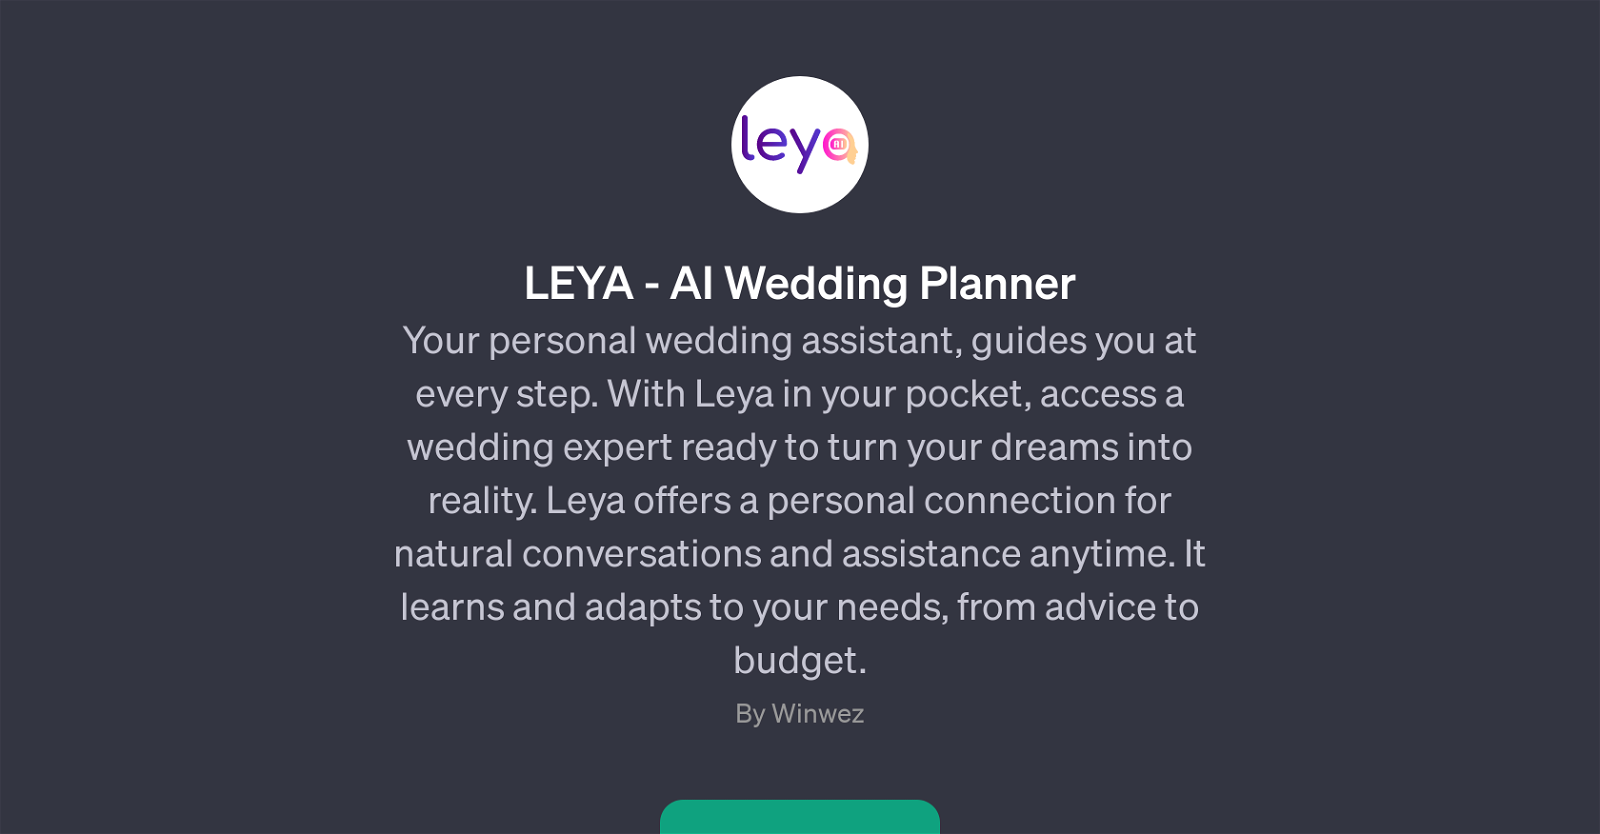 LEYA - AI Wedding Planner website